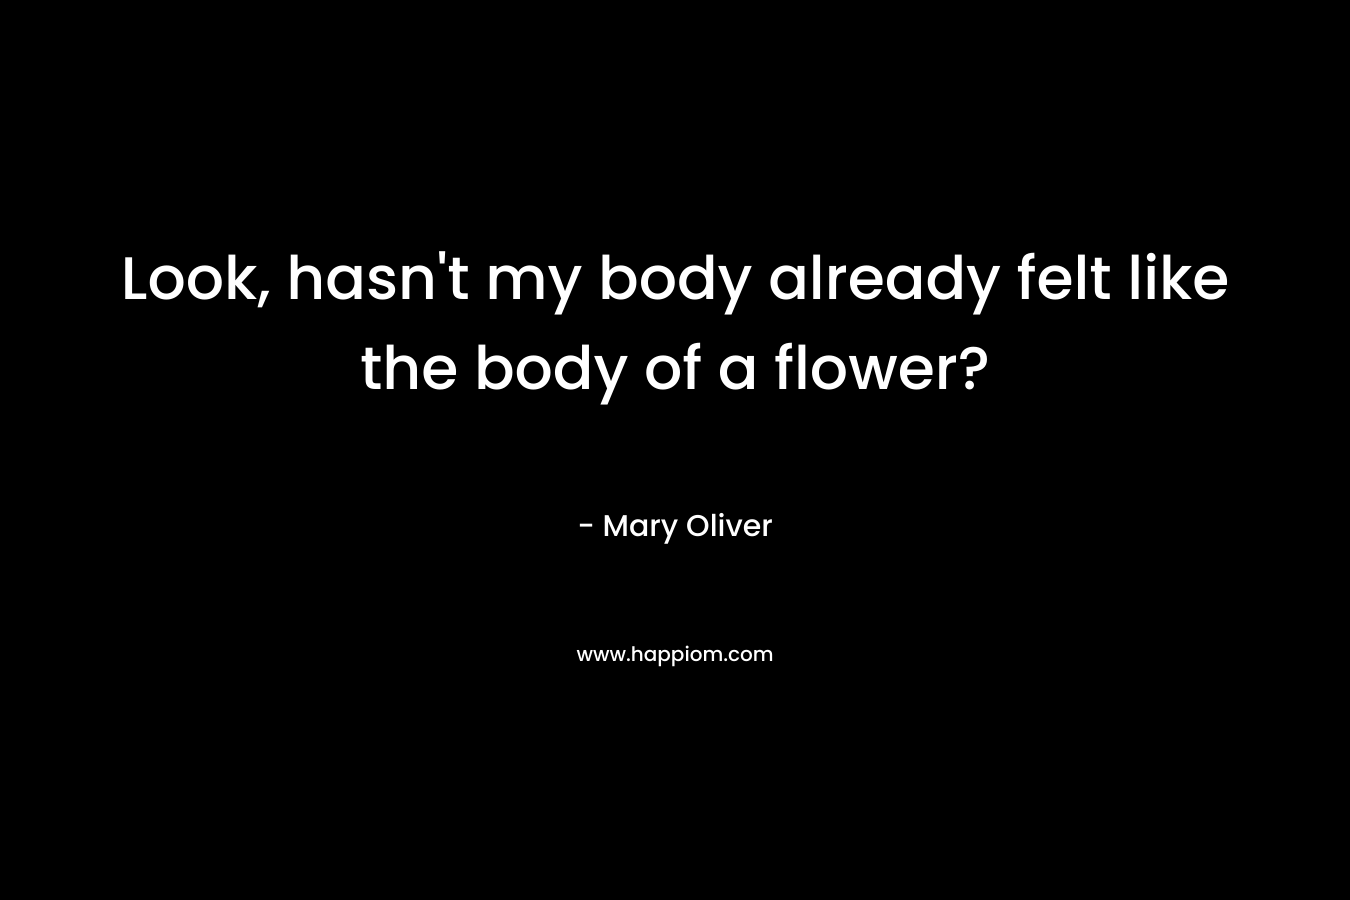 Look, hasn’t my body already felt like the body of a flower? – Mary Oliver